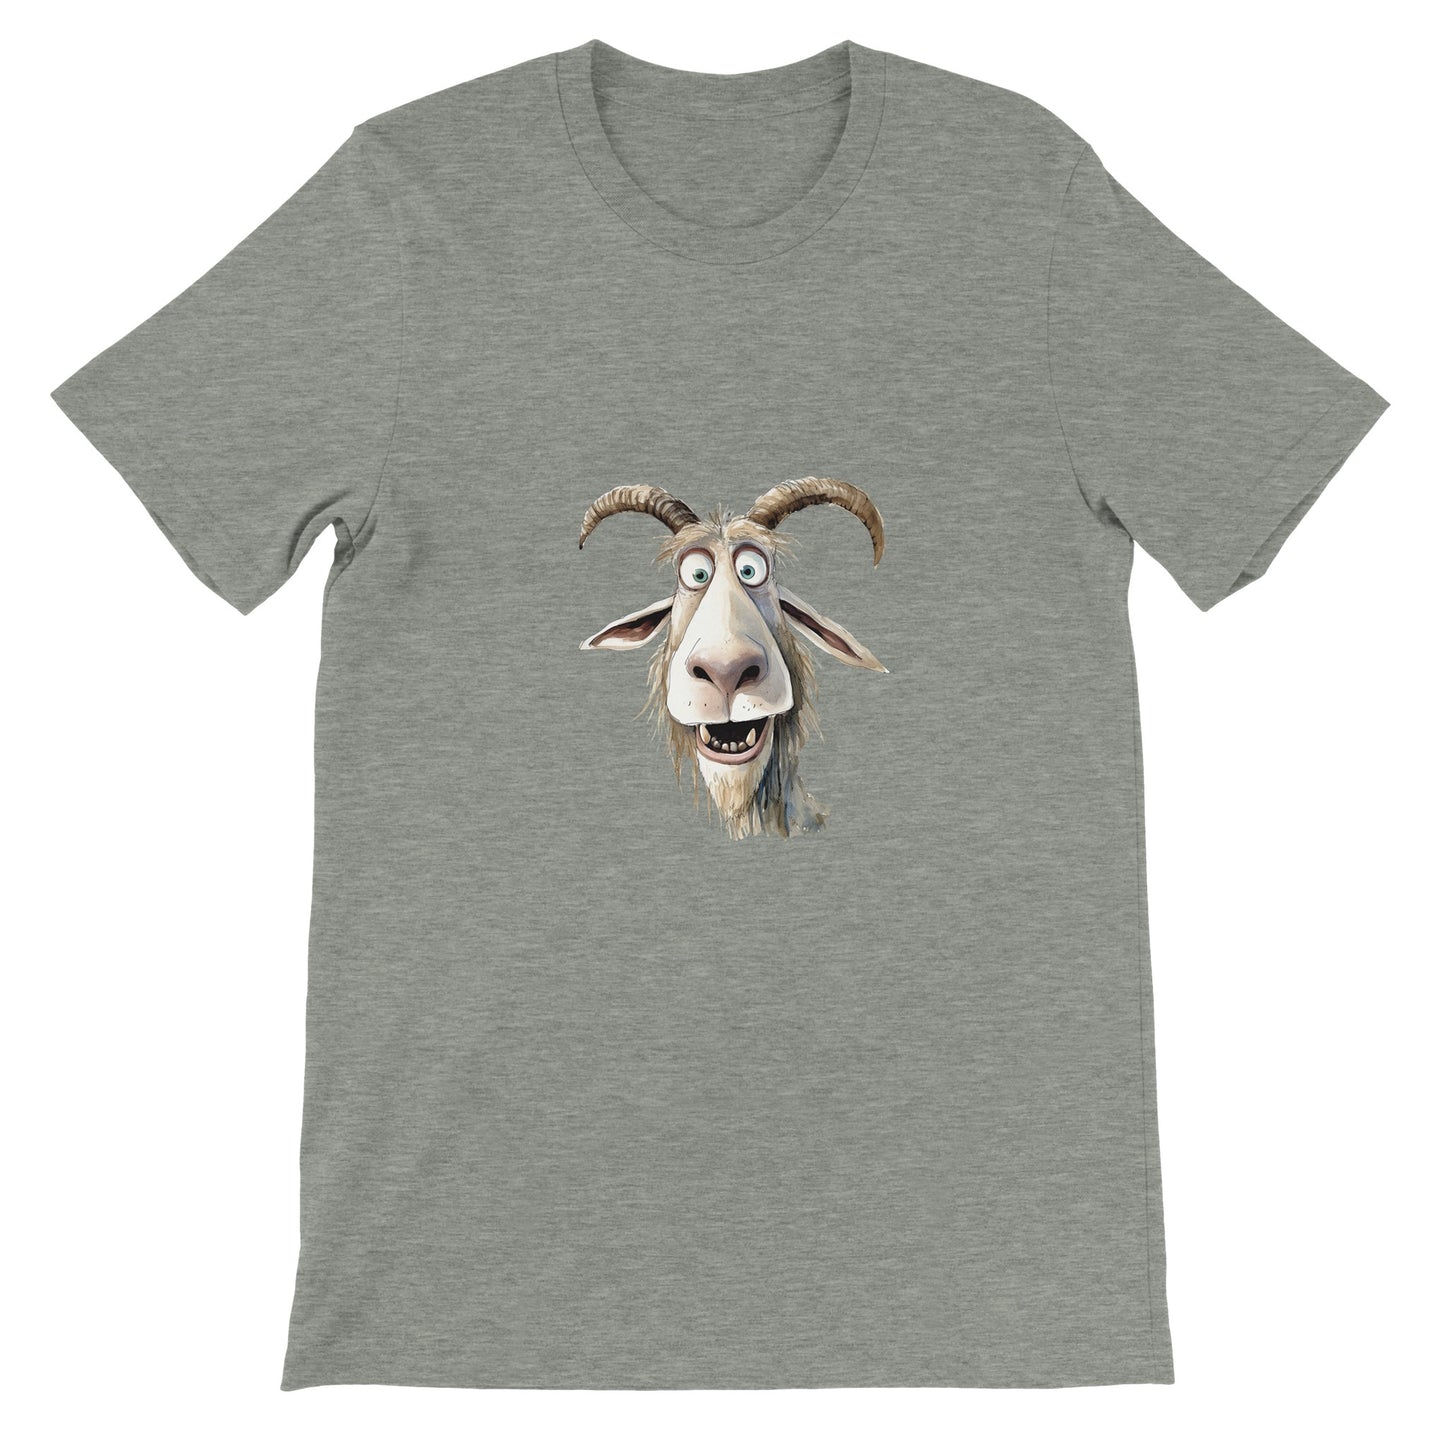 Budget Unisex Crewneck T-shirt/Funny-Goat